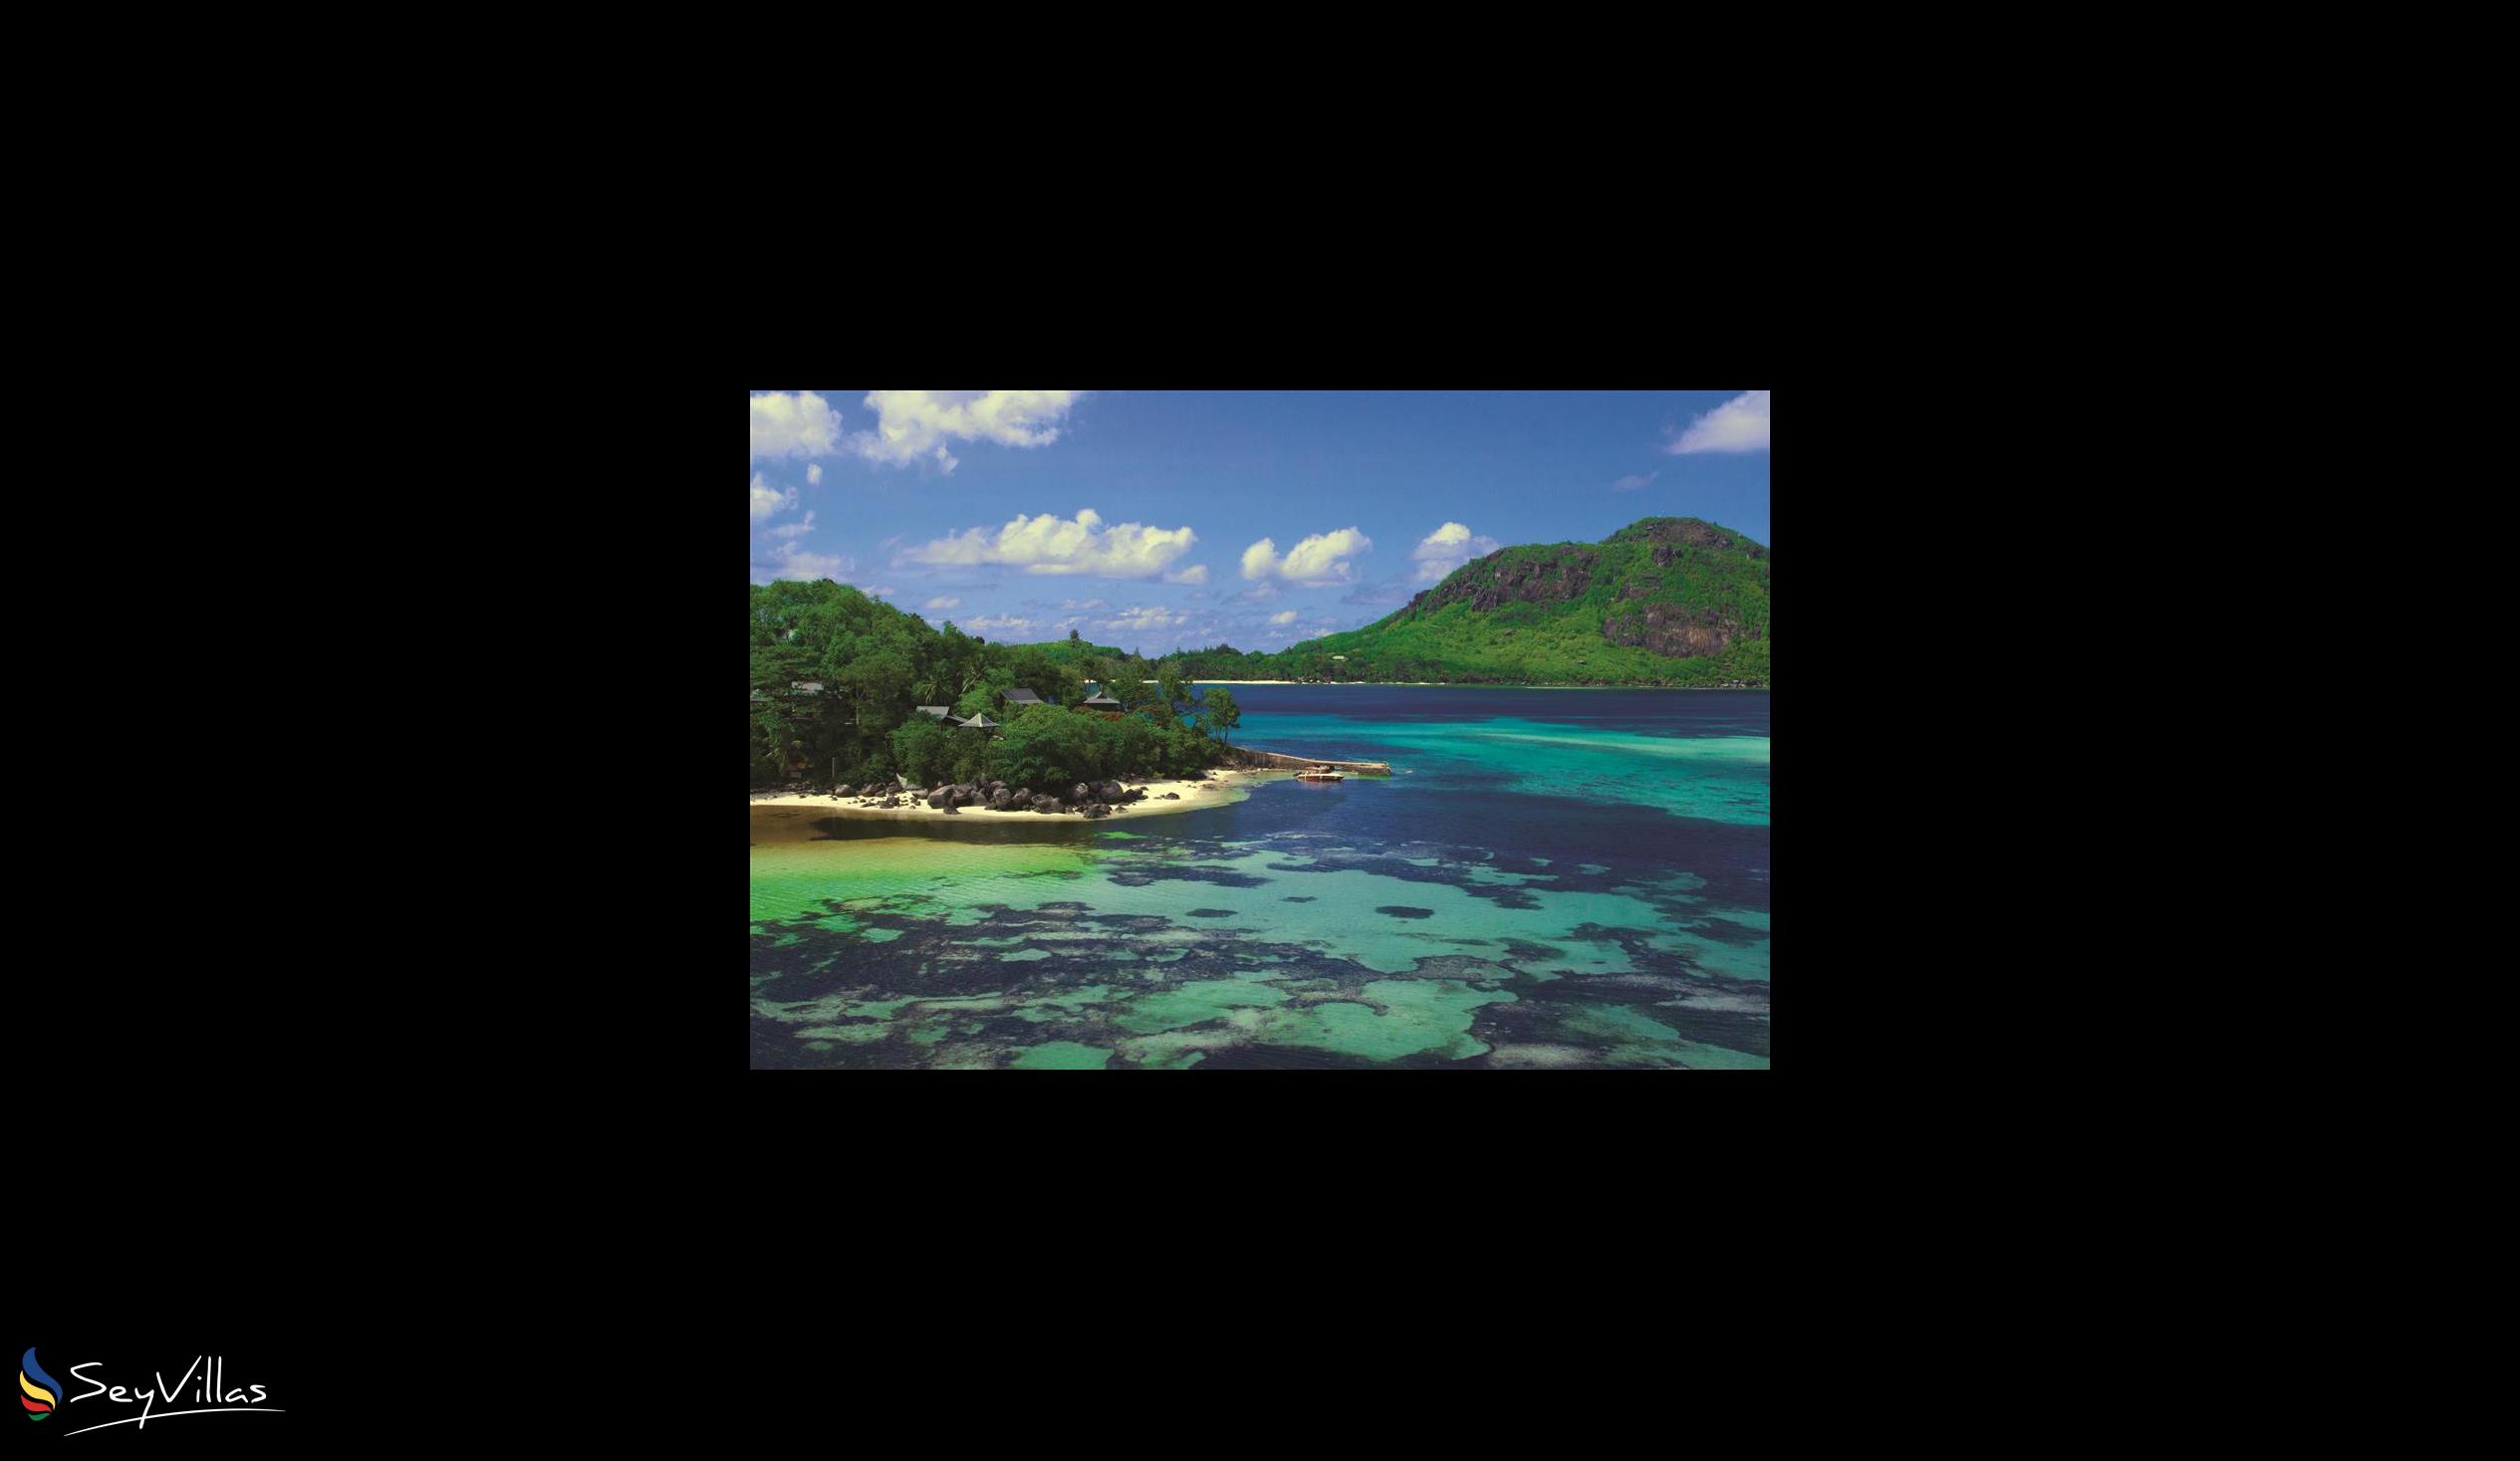 Photo 50: JA Enchanted Island Resort - Location - Round Island (Seychelles)